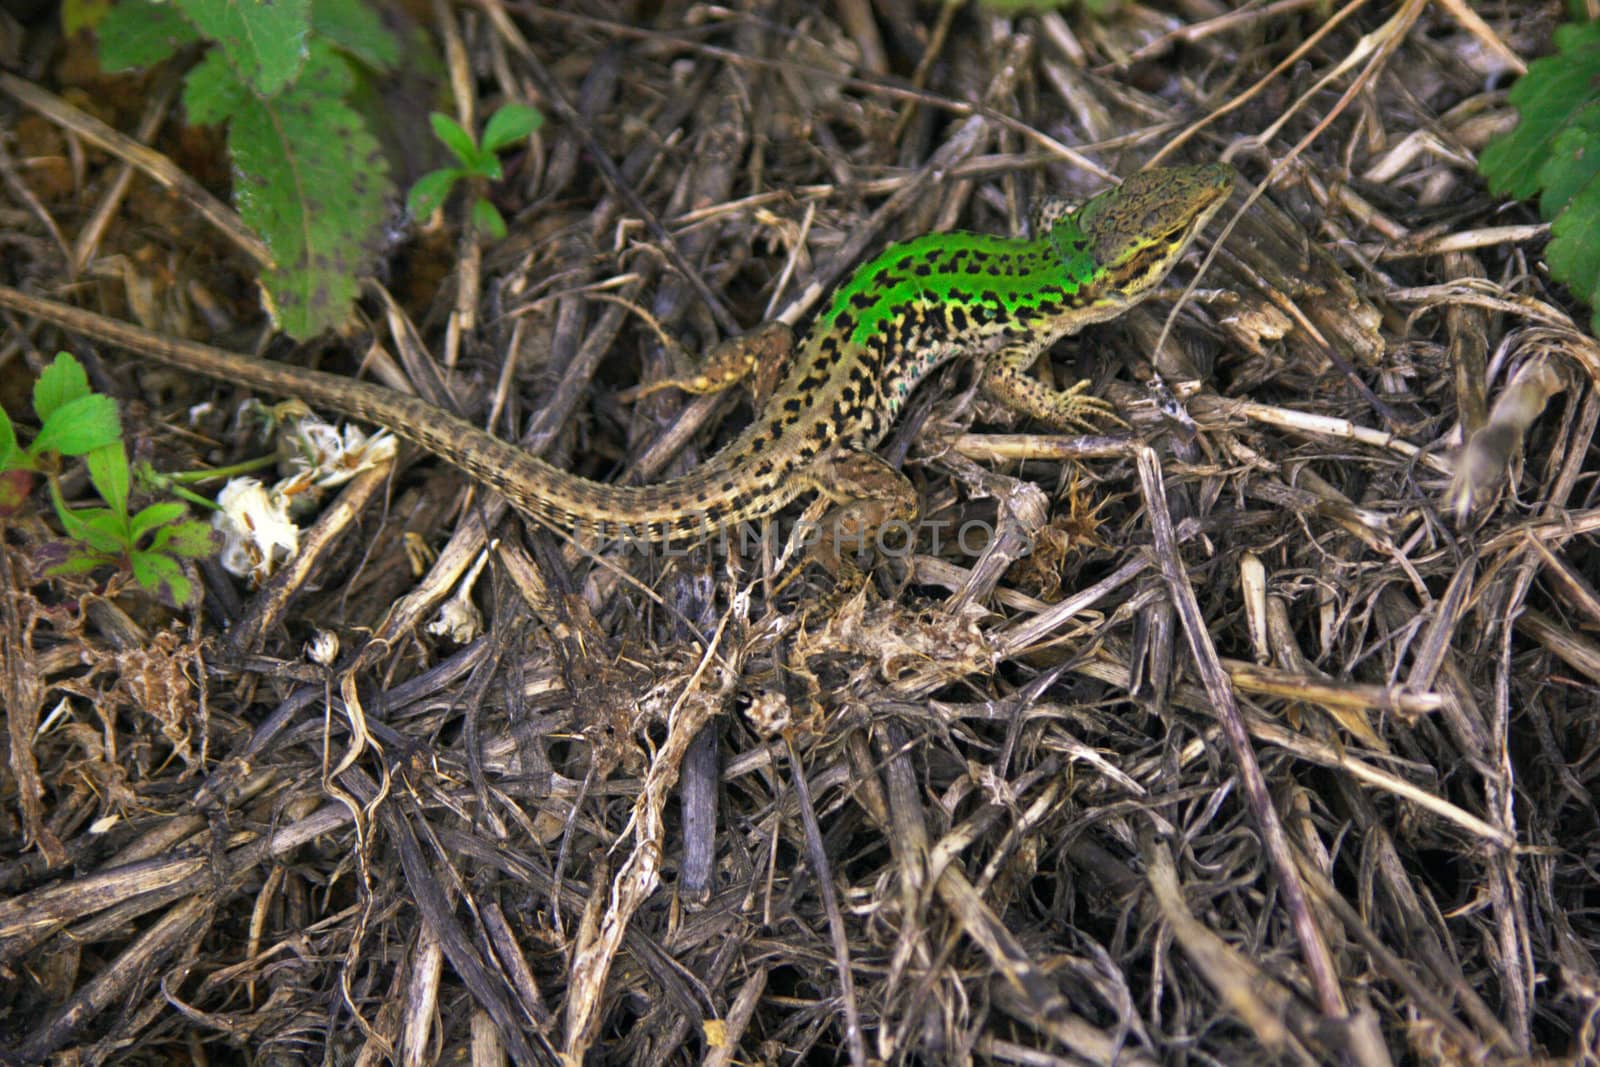 Lizard by charlieisland